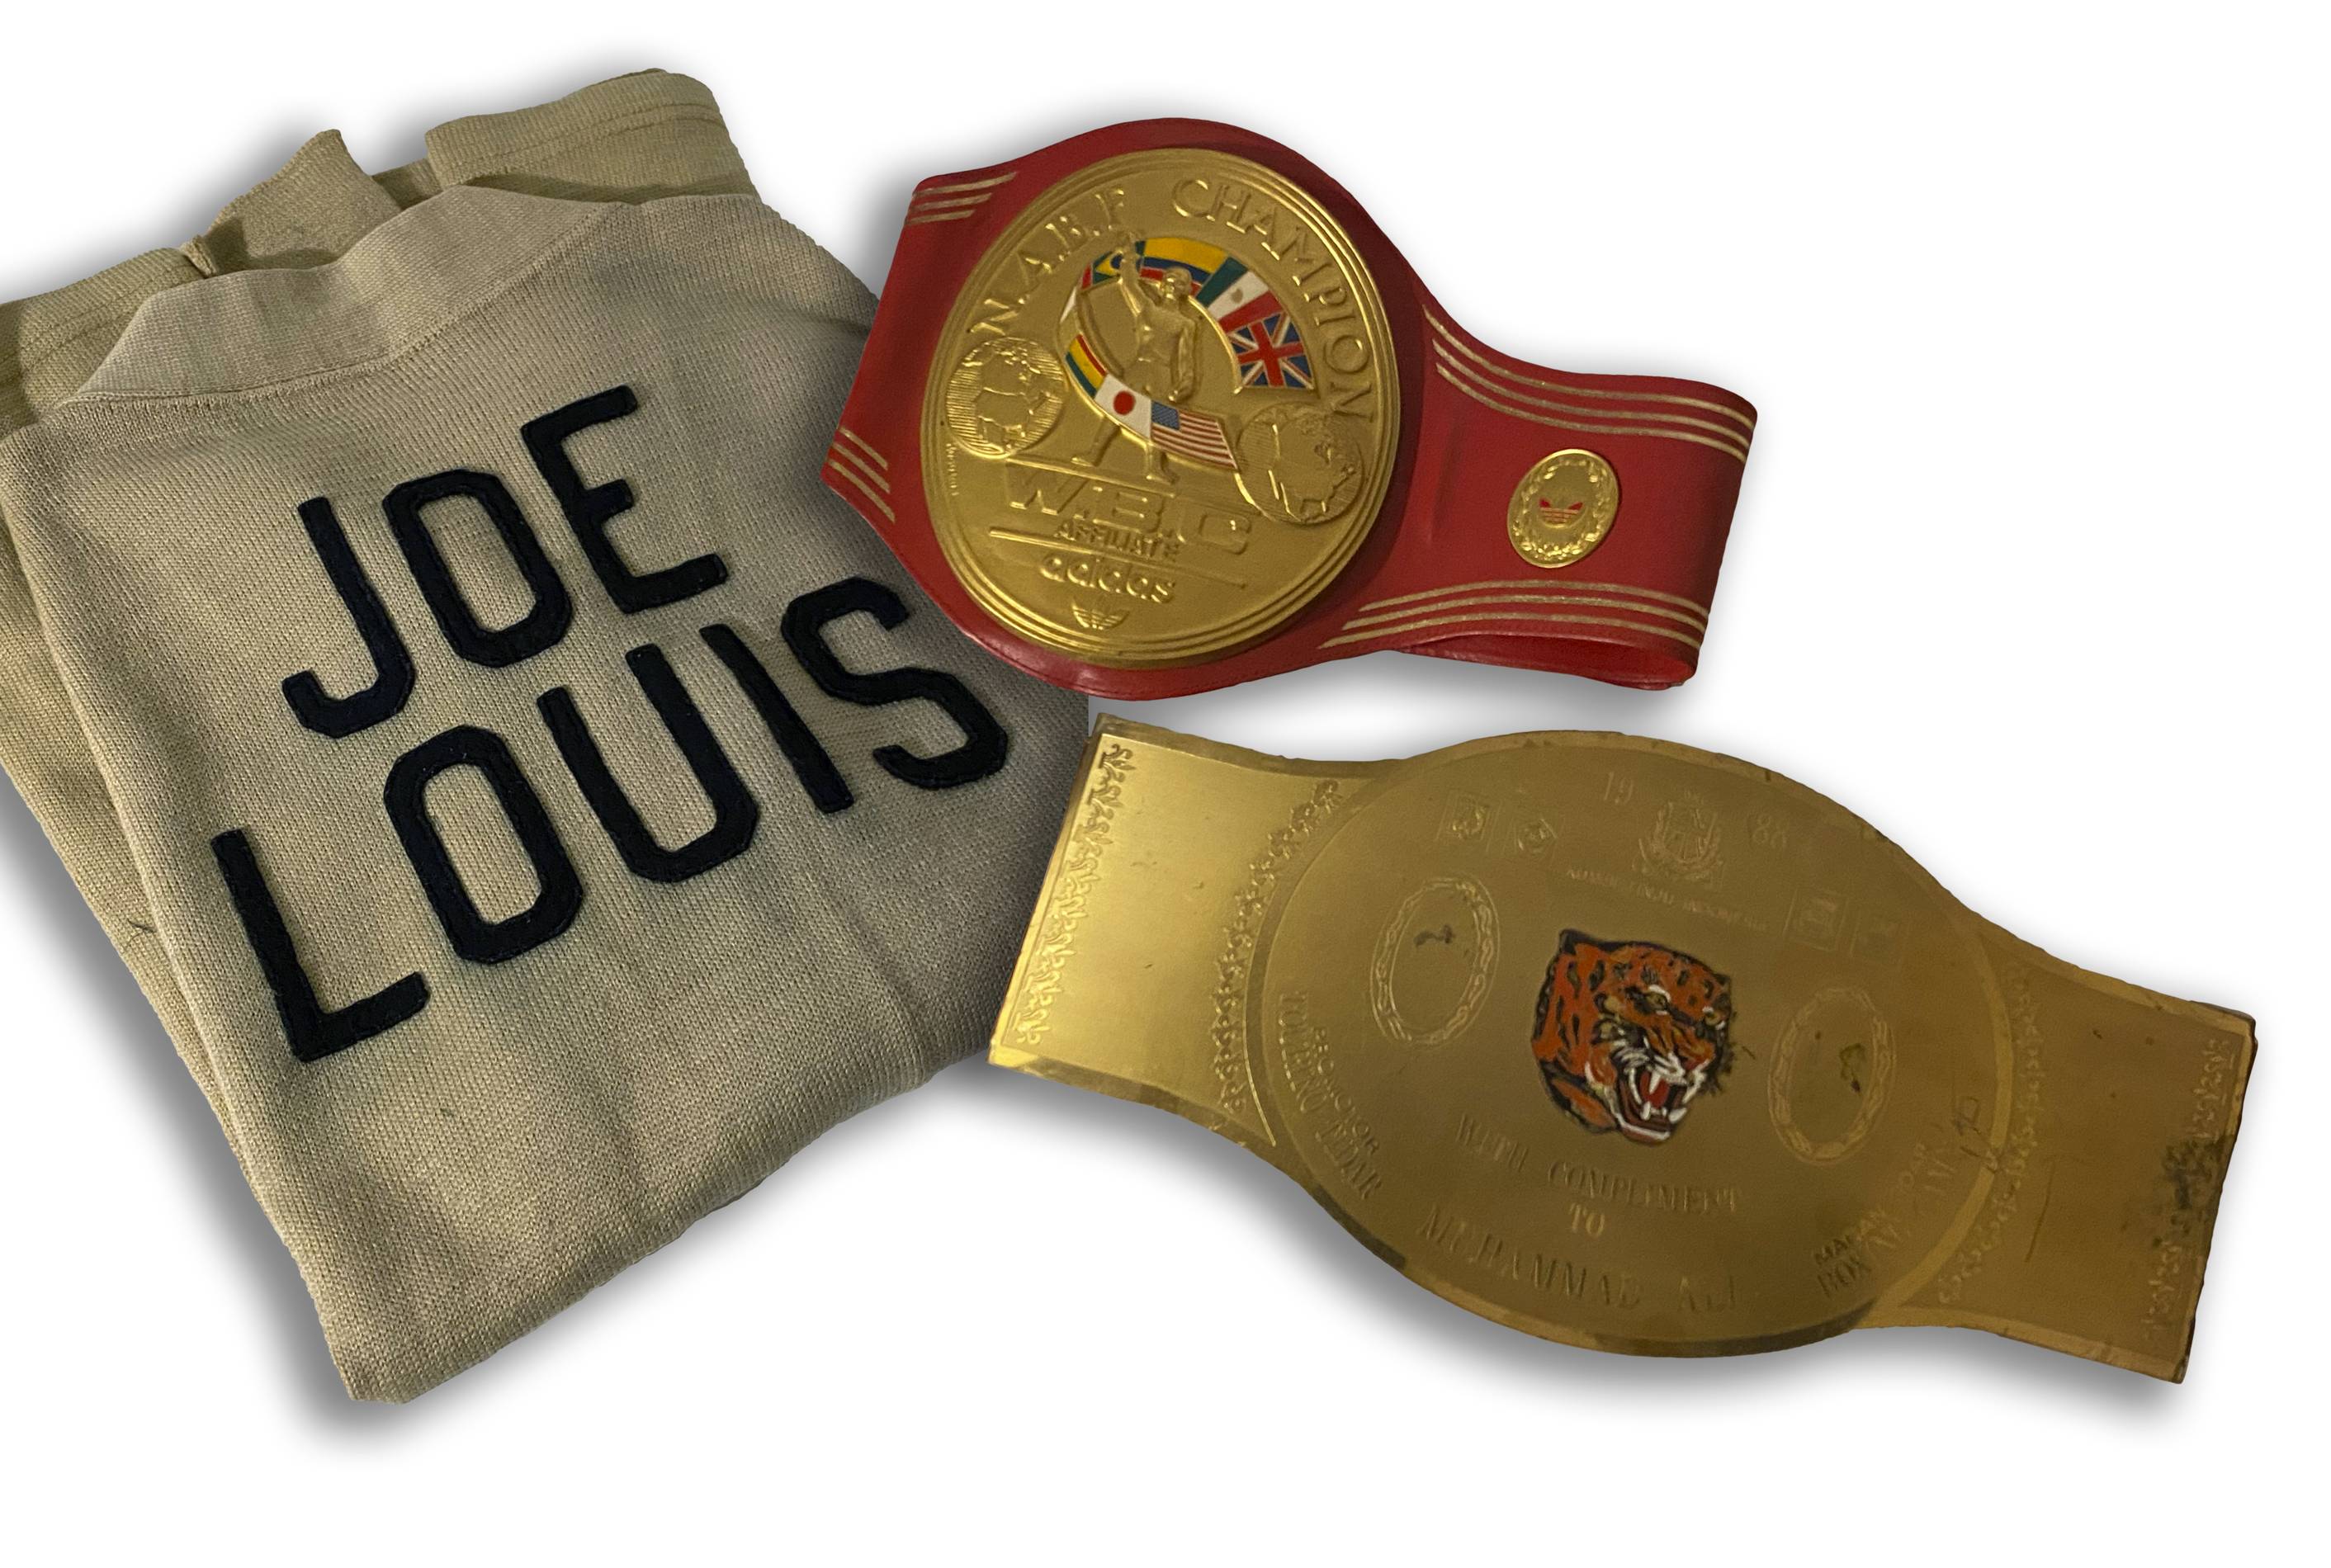 Joe Louis boxer memorabilia